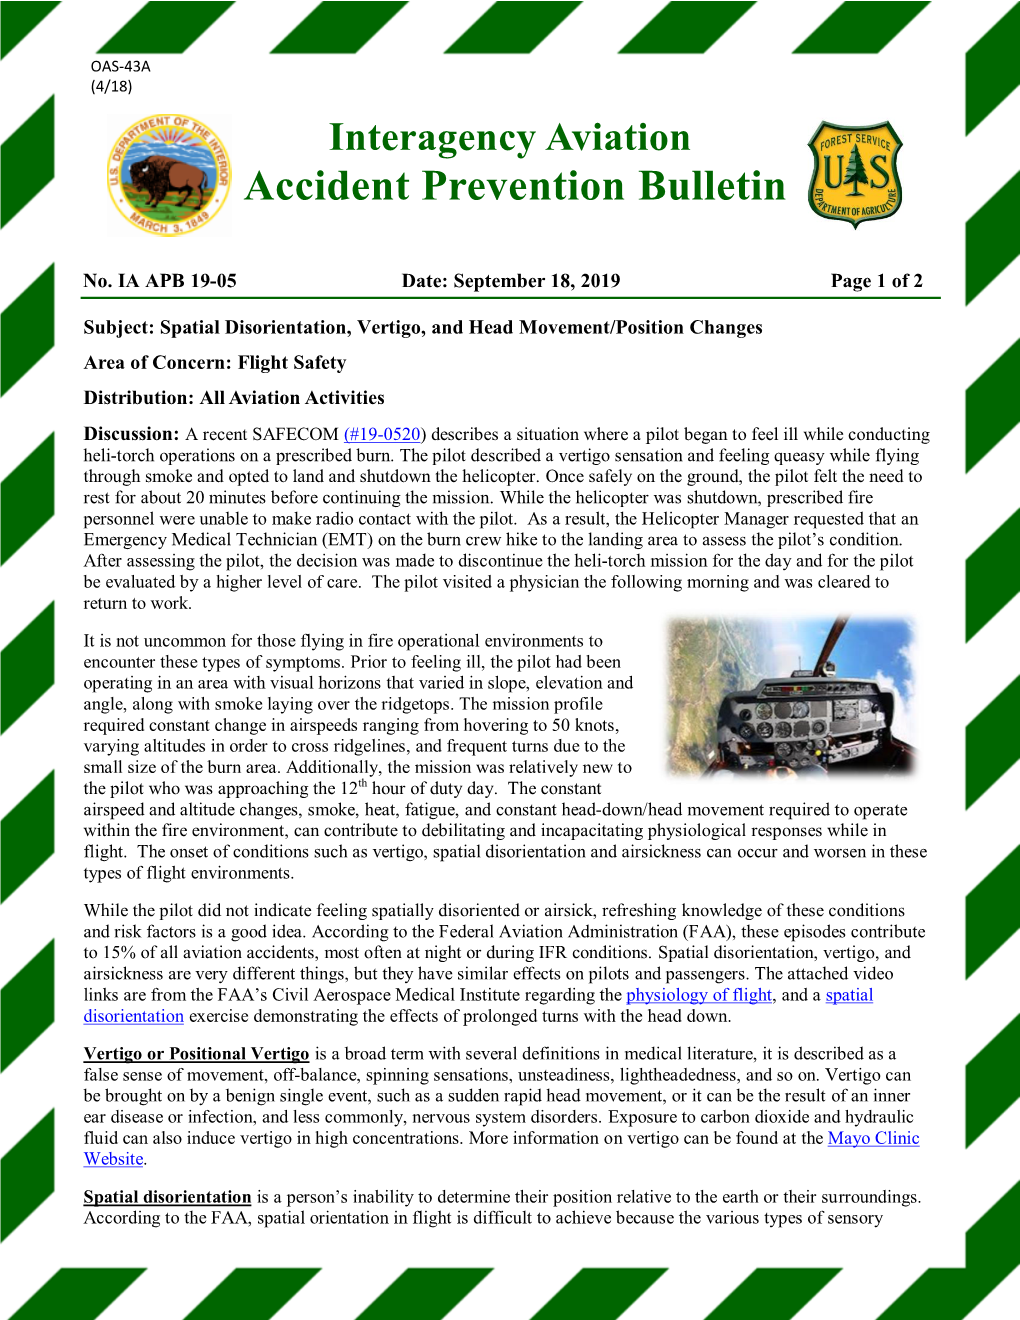 Interagency Aviation Accident Prevention Bulletin